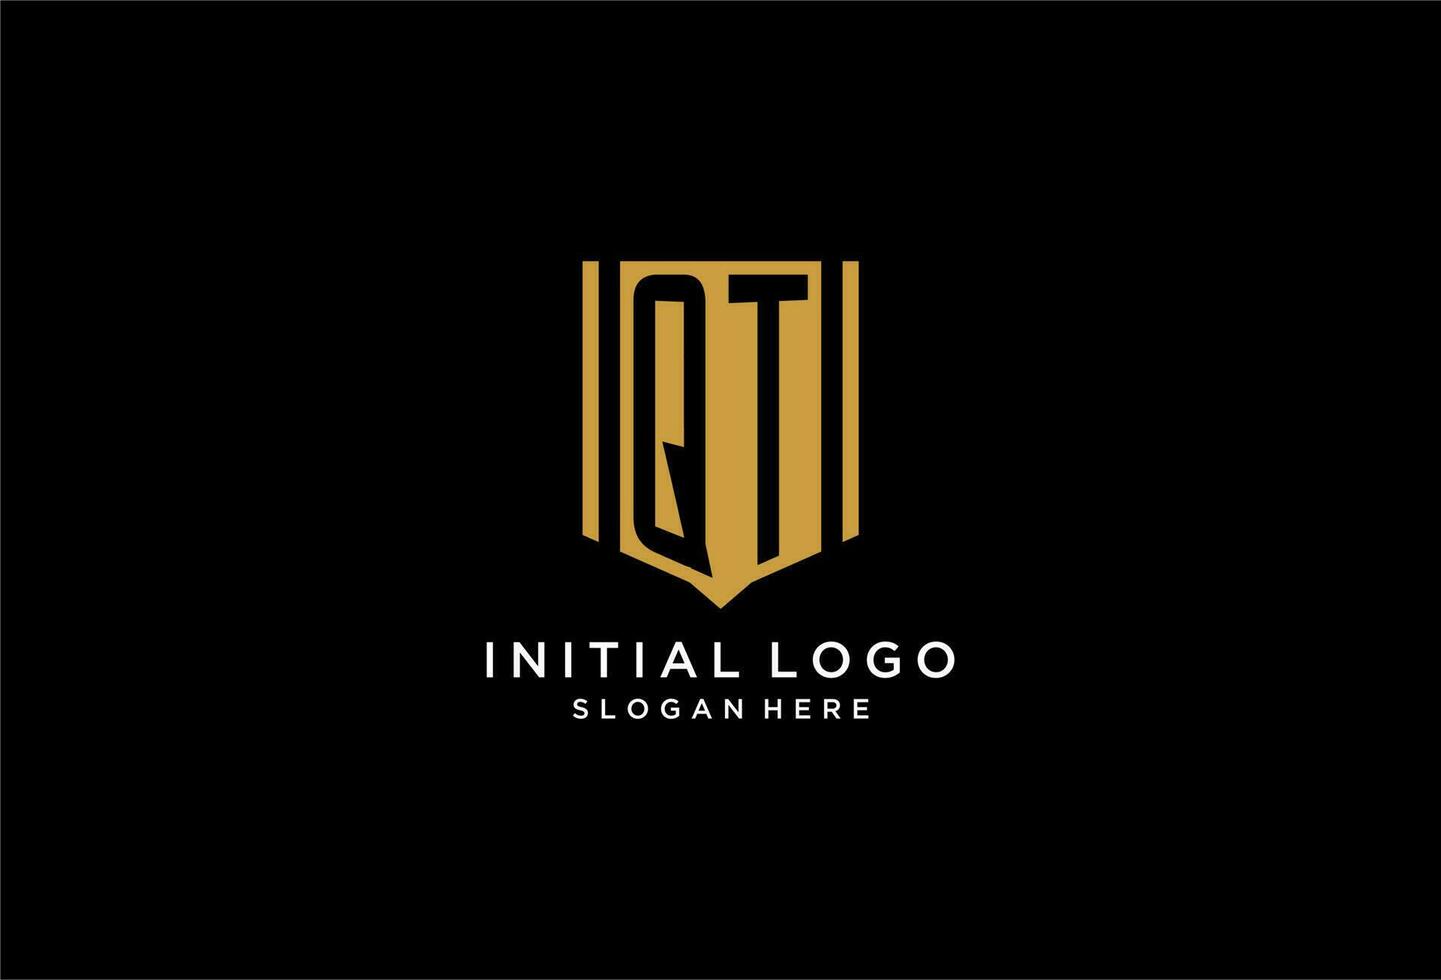 QT monogram logo with geometric shield icon design vector